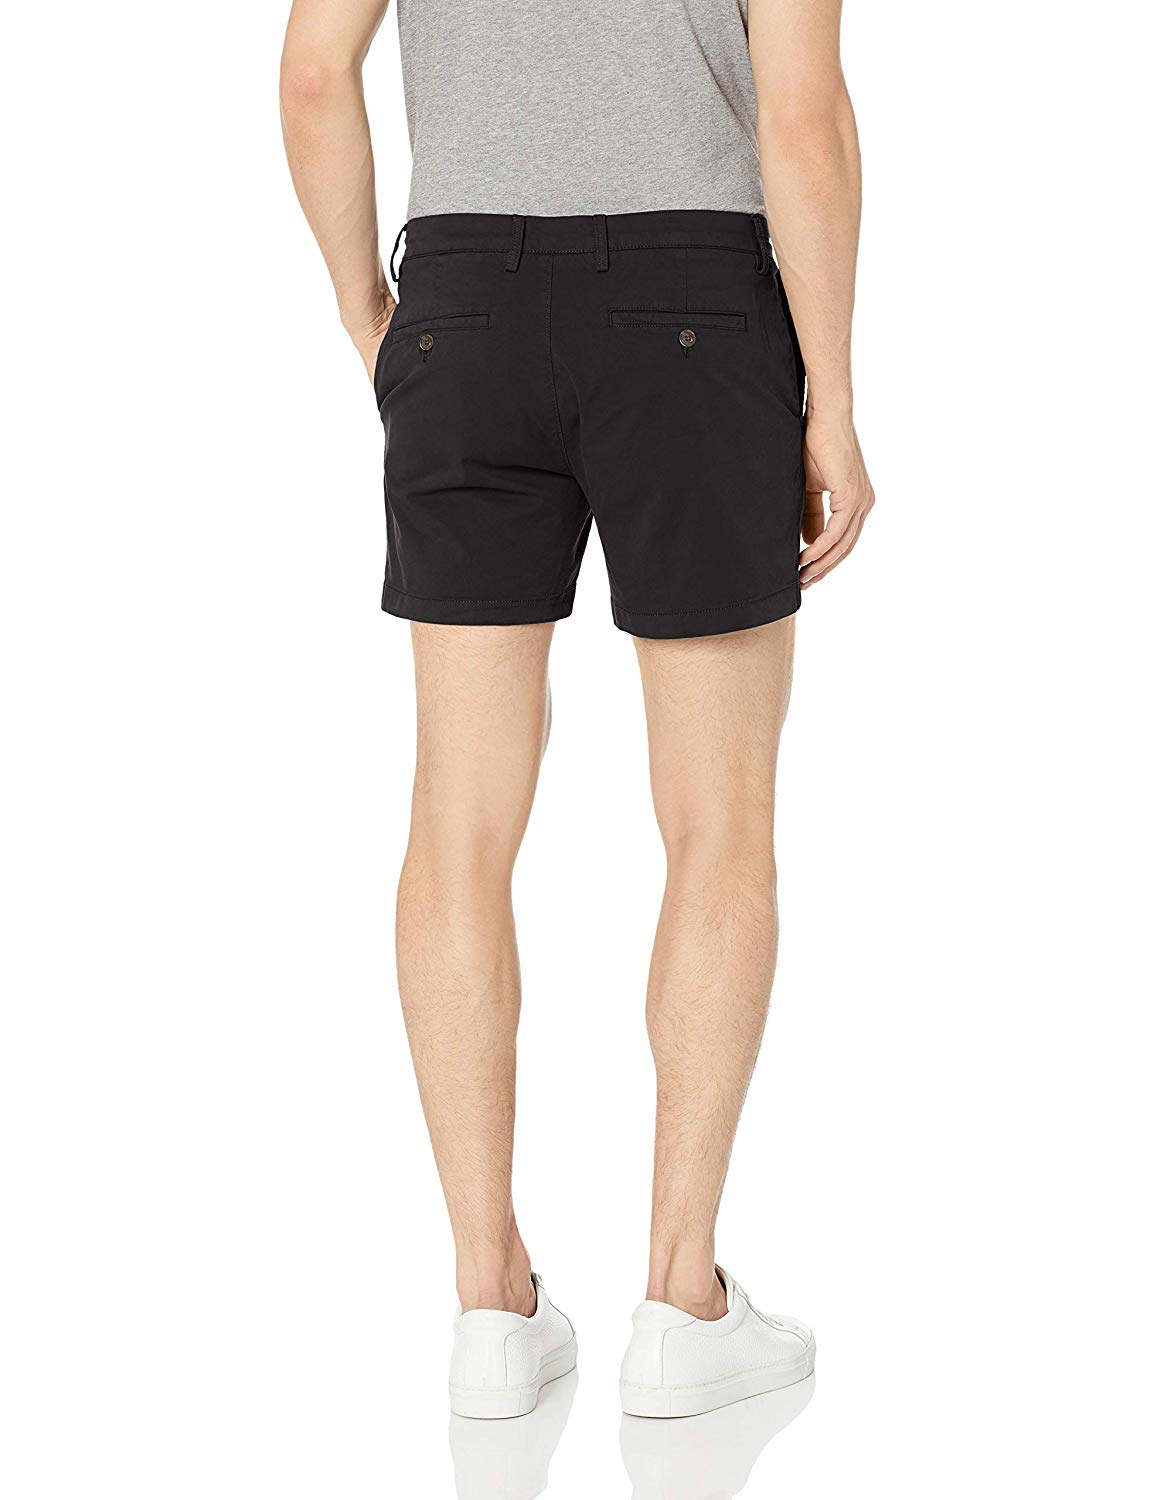 Best 5 Inseam Shorts For Men